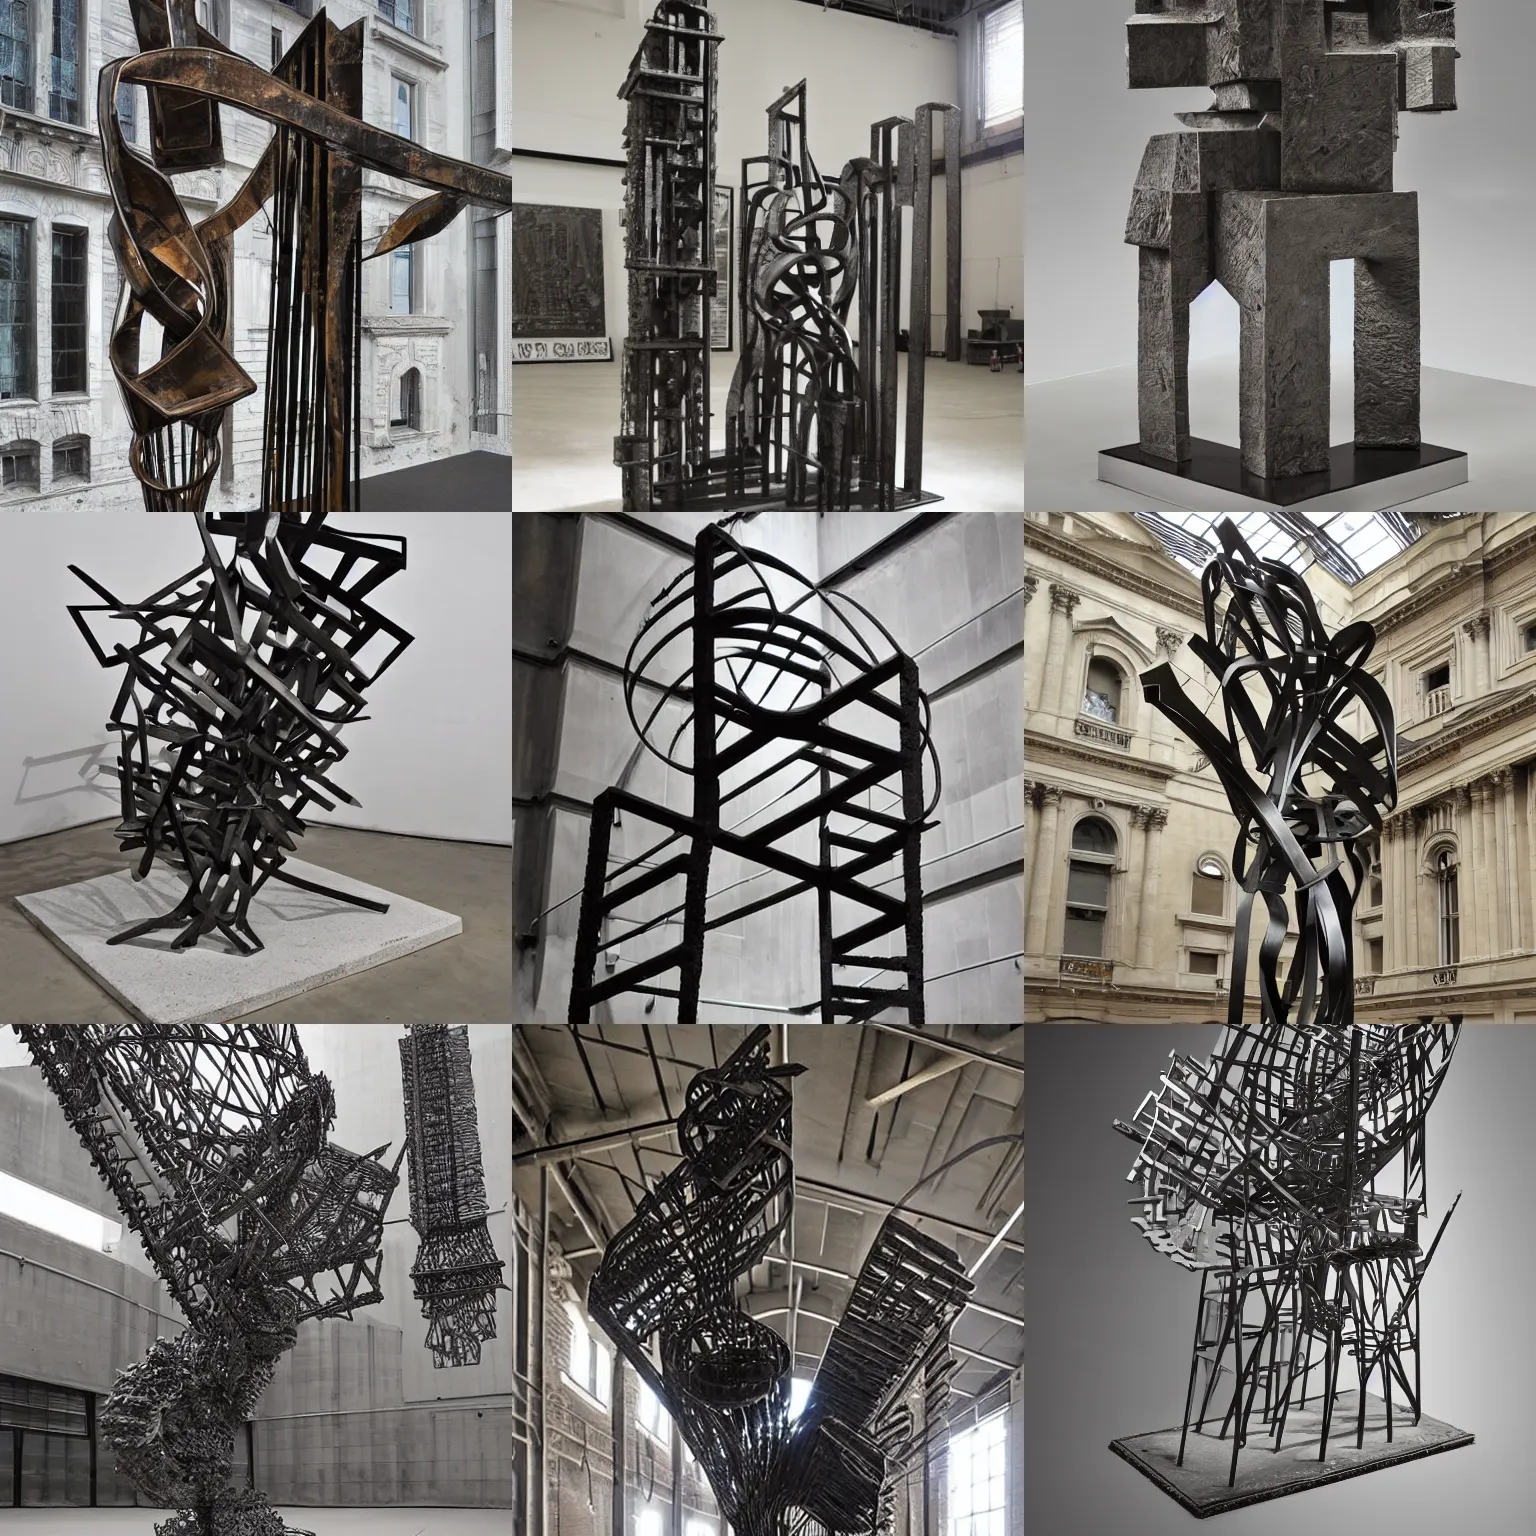 Prompt: Award-winning sculpture by Giovanni Battista Piranesi and Eduardo Chillida. Made of steel, hyper-detailed. Studio lightning